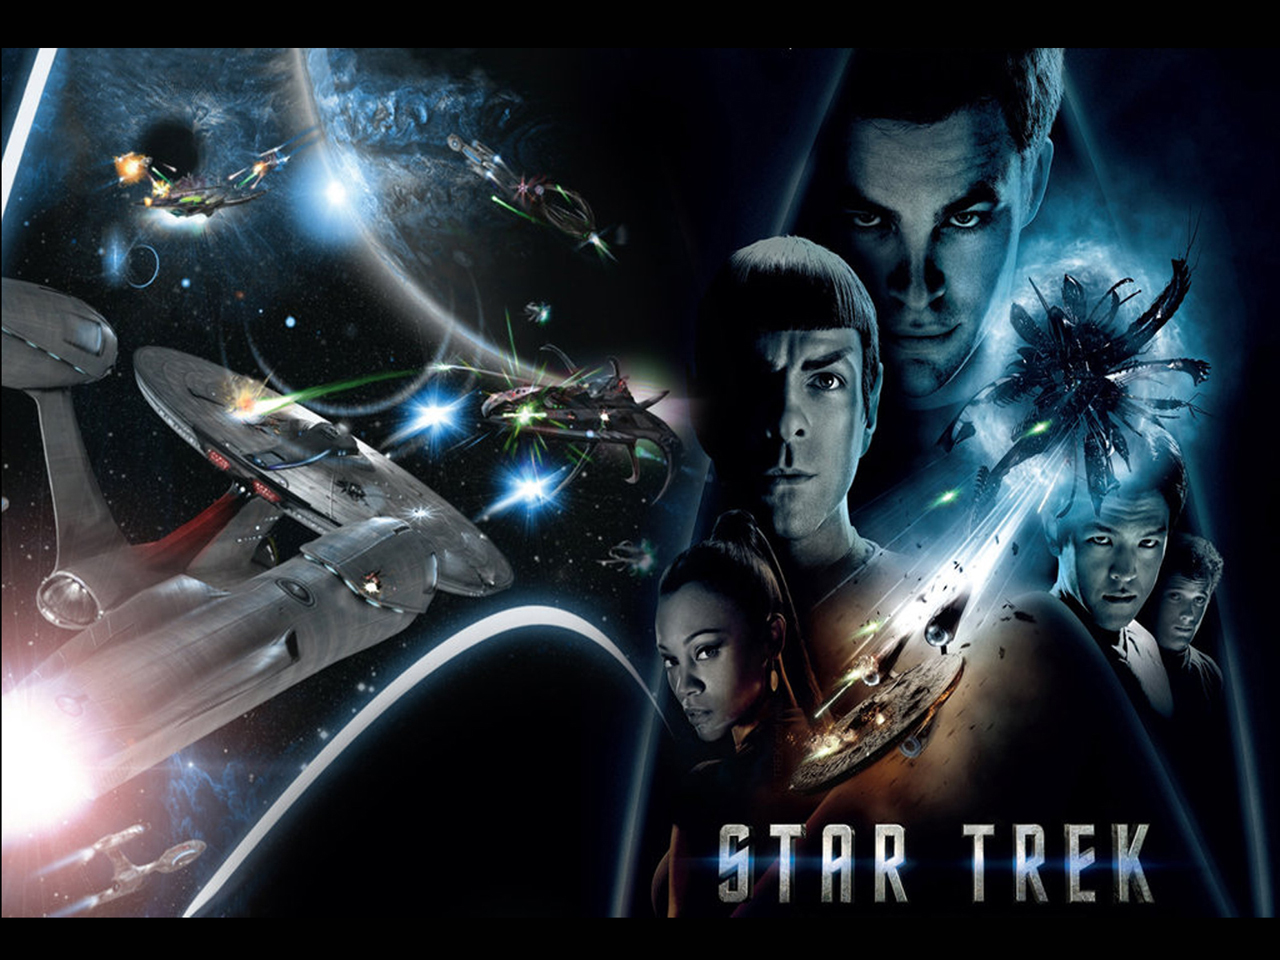 - Star Trek 2009 Movie Wallpaper - free Star Trek computer desktop wallpaper, pictures, images.